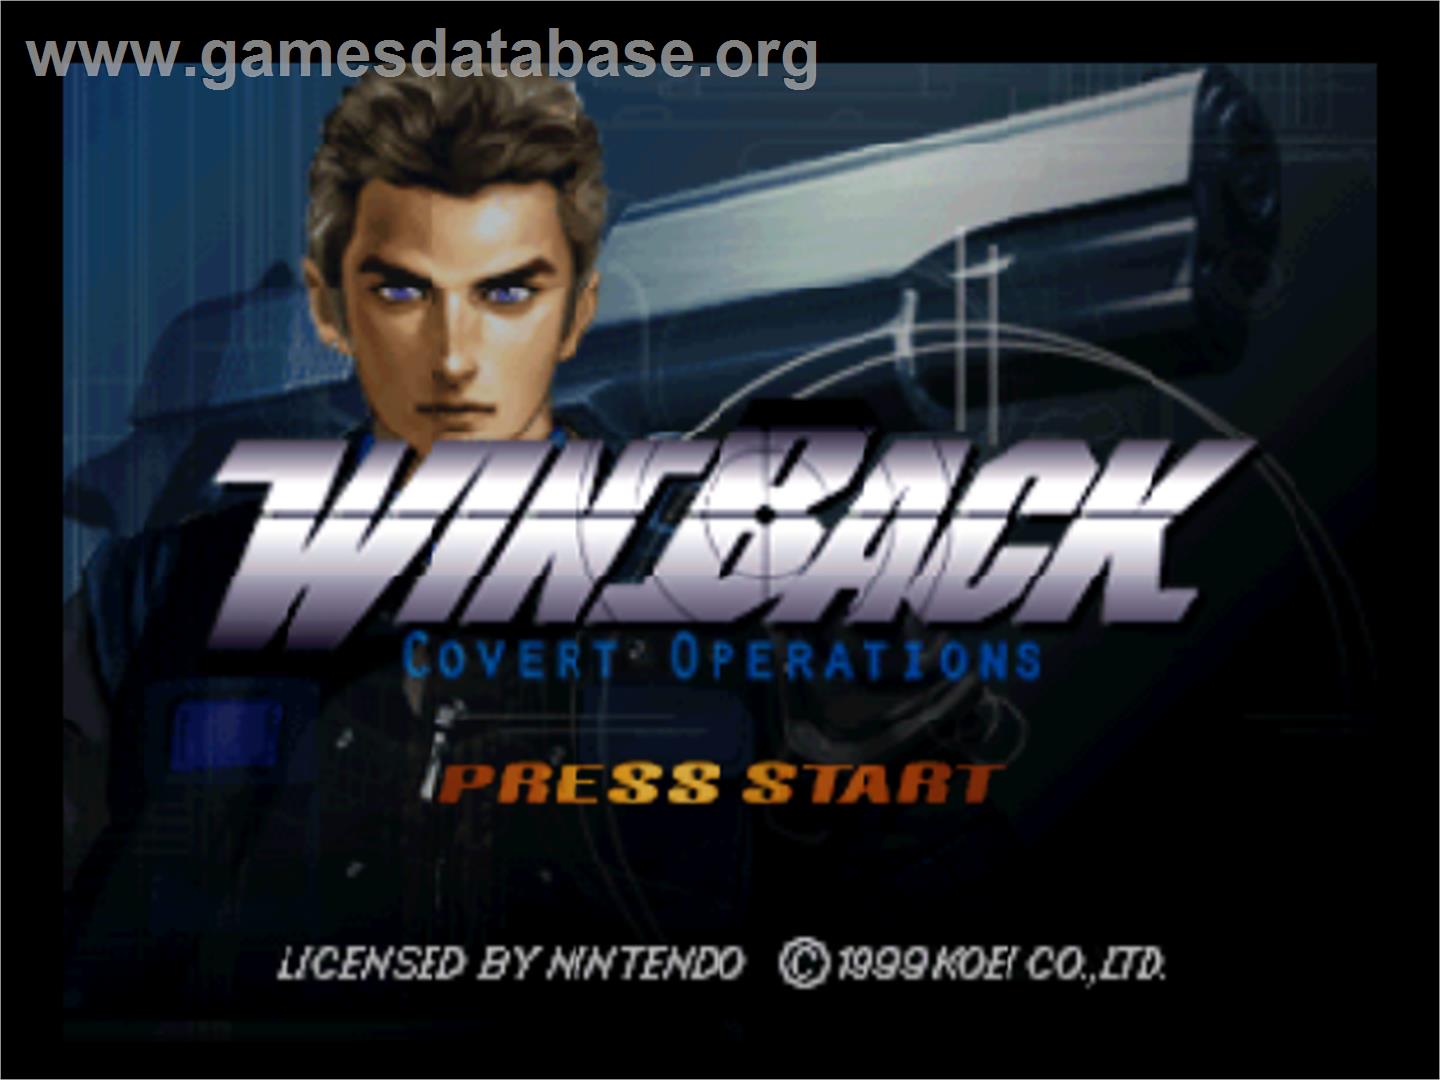 WinBack: Covert Operations - Nintendo N64 - Artwork - Title Screen